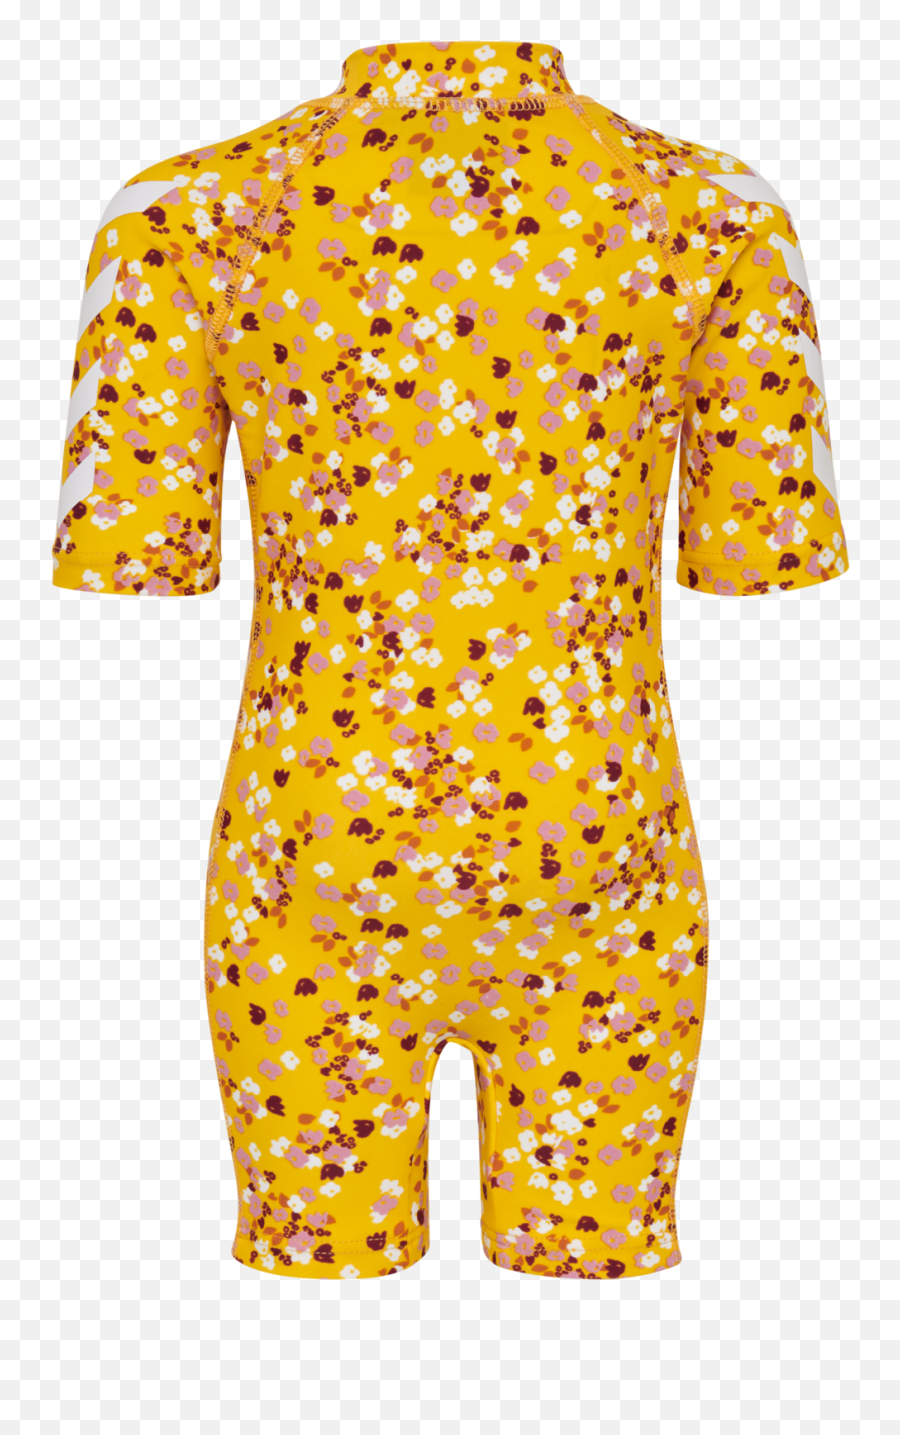 Hummel Beach Swimsuit - Golden Rod Hummelnet Short Sleeve Emoji,Emojis Onesies For Adults